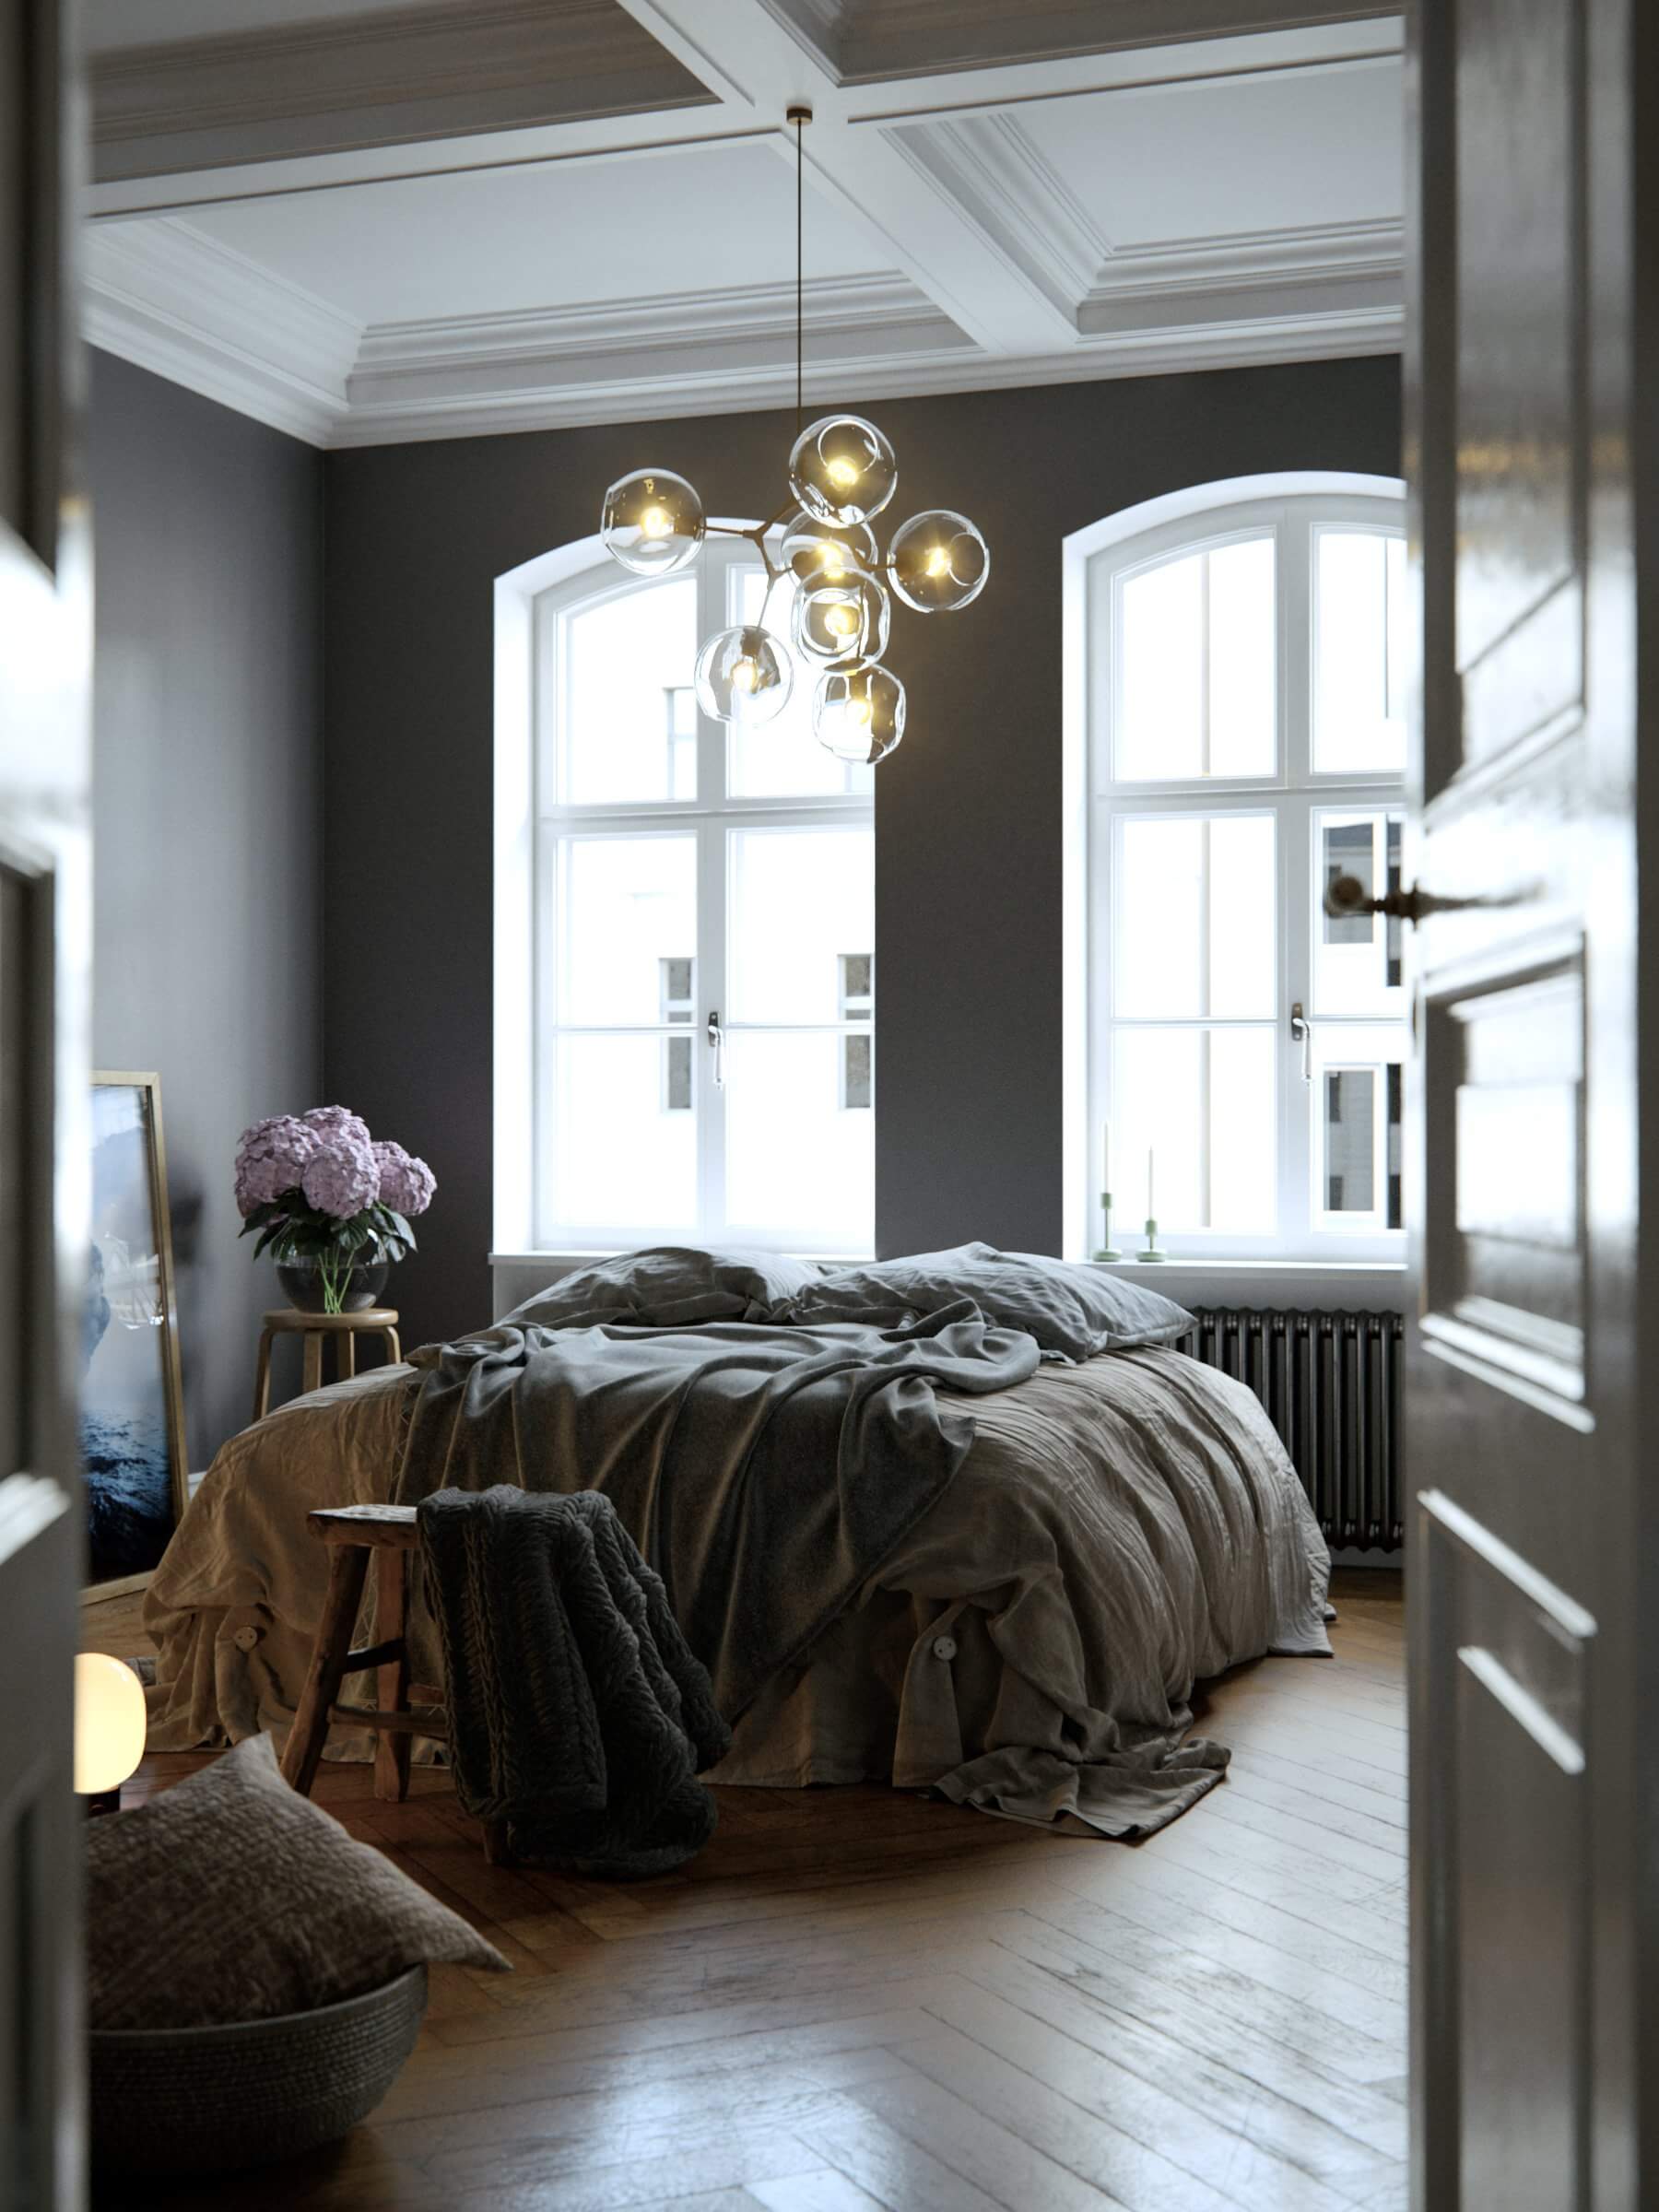 Classical apartment bedroom - cgi visualization